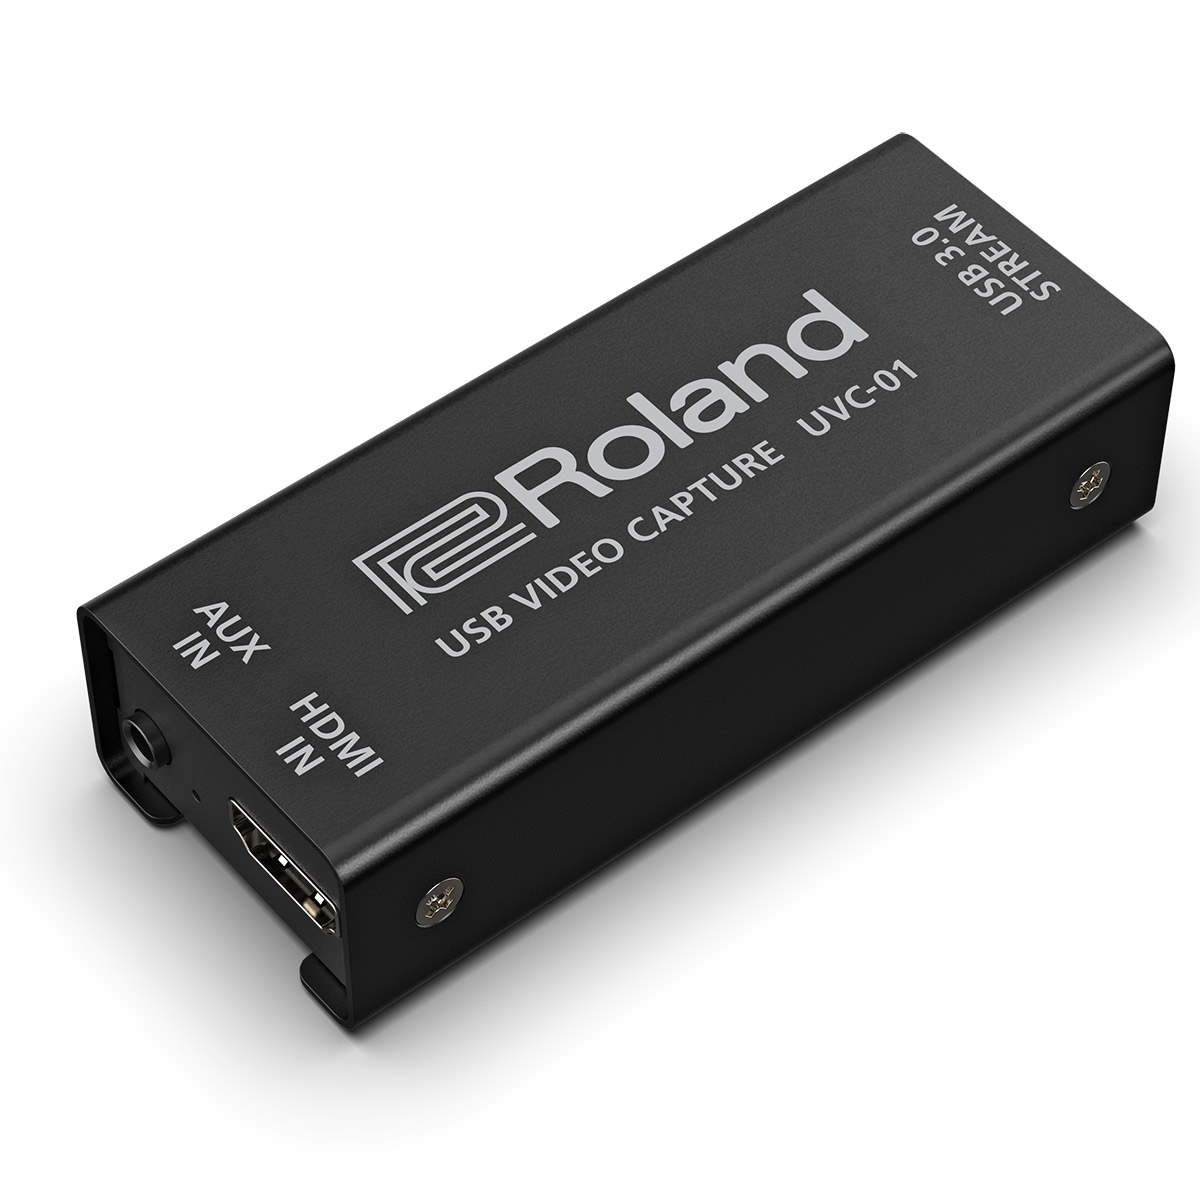 Roland UVC-01 ビデオキャプチャー USB VIDEO 直営店に限定 ローランド CAPTURE 最大46%OFFクーポン